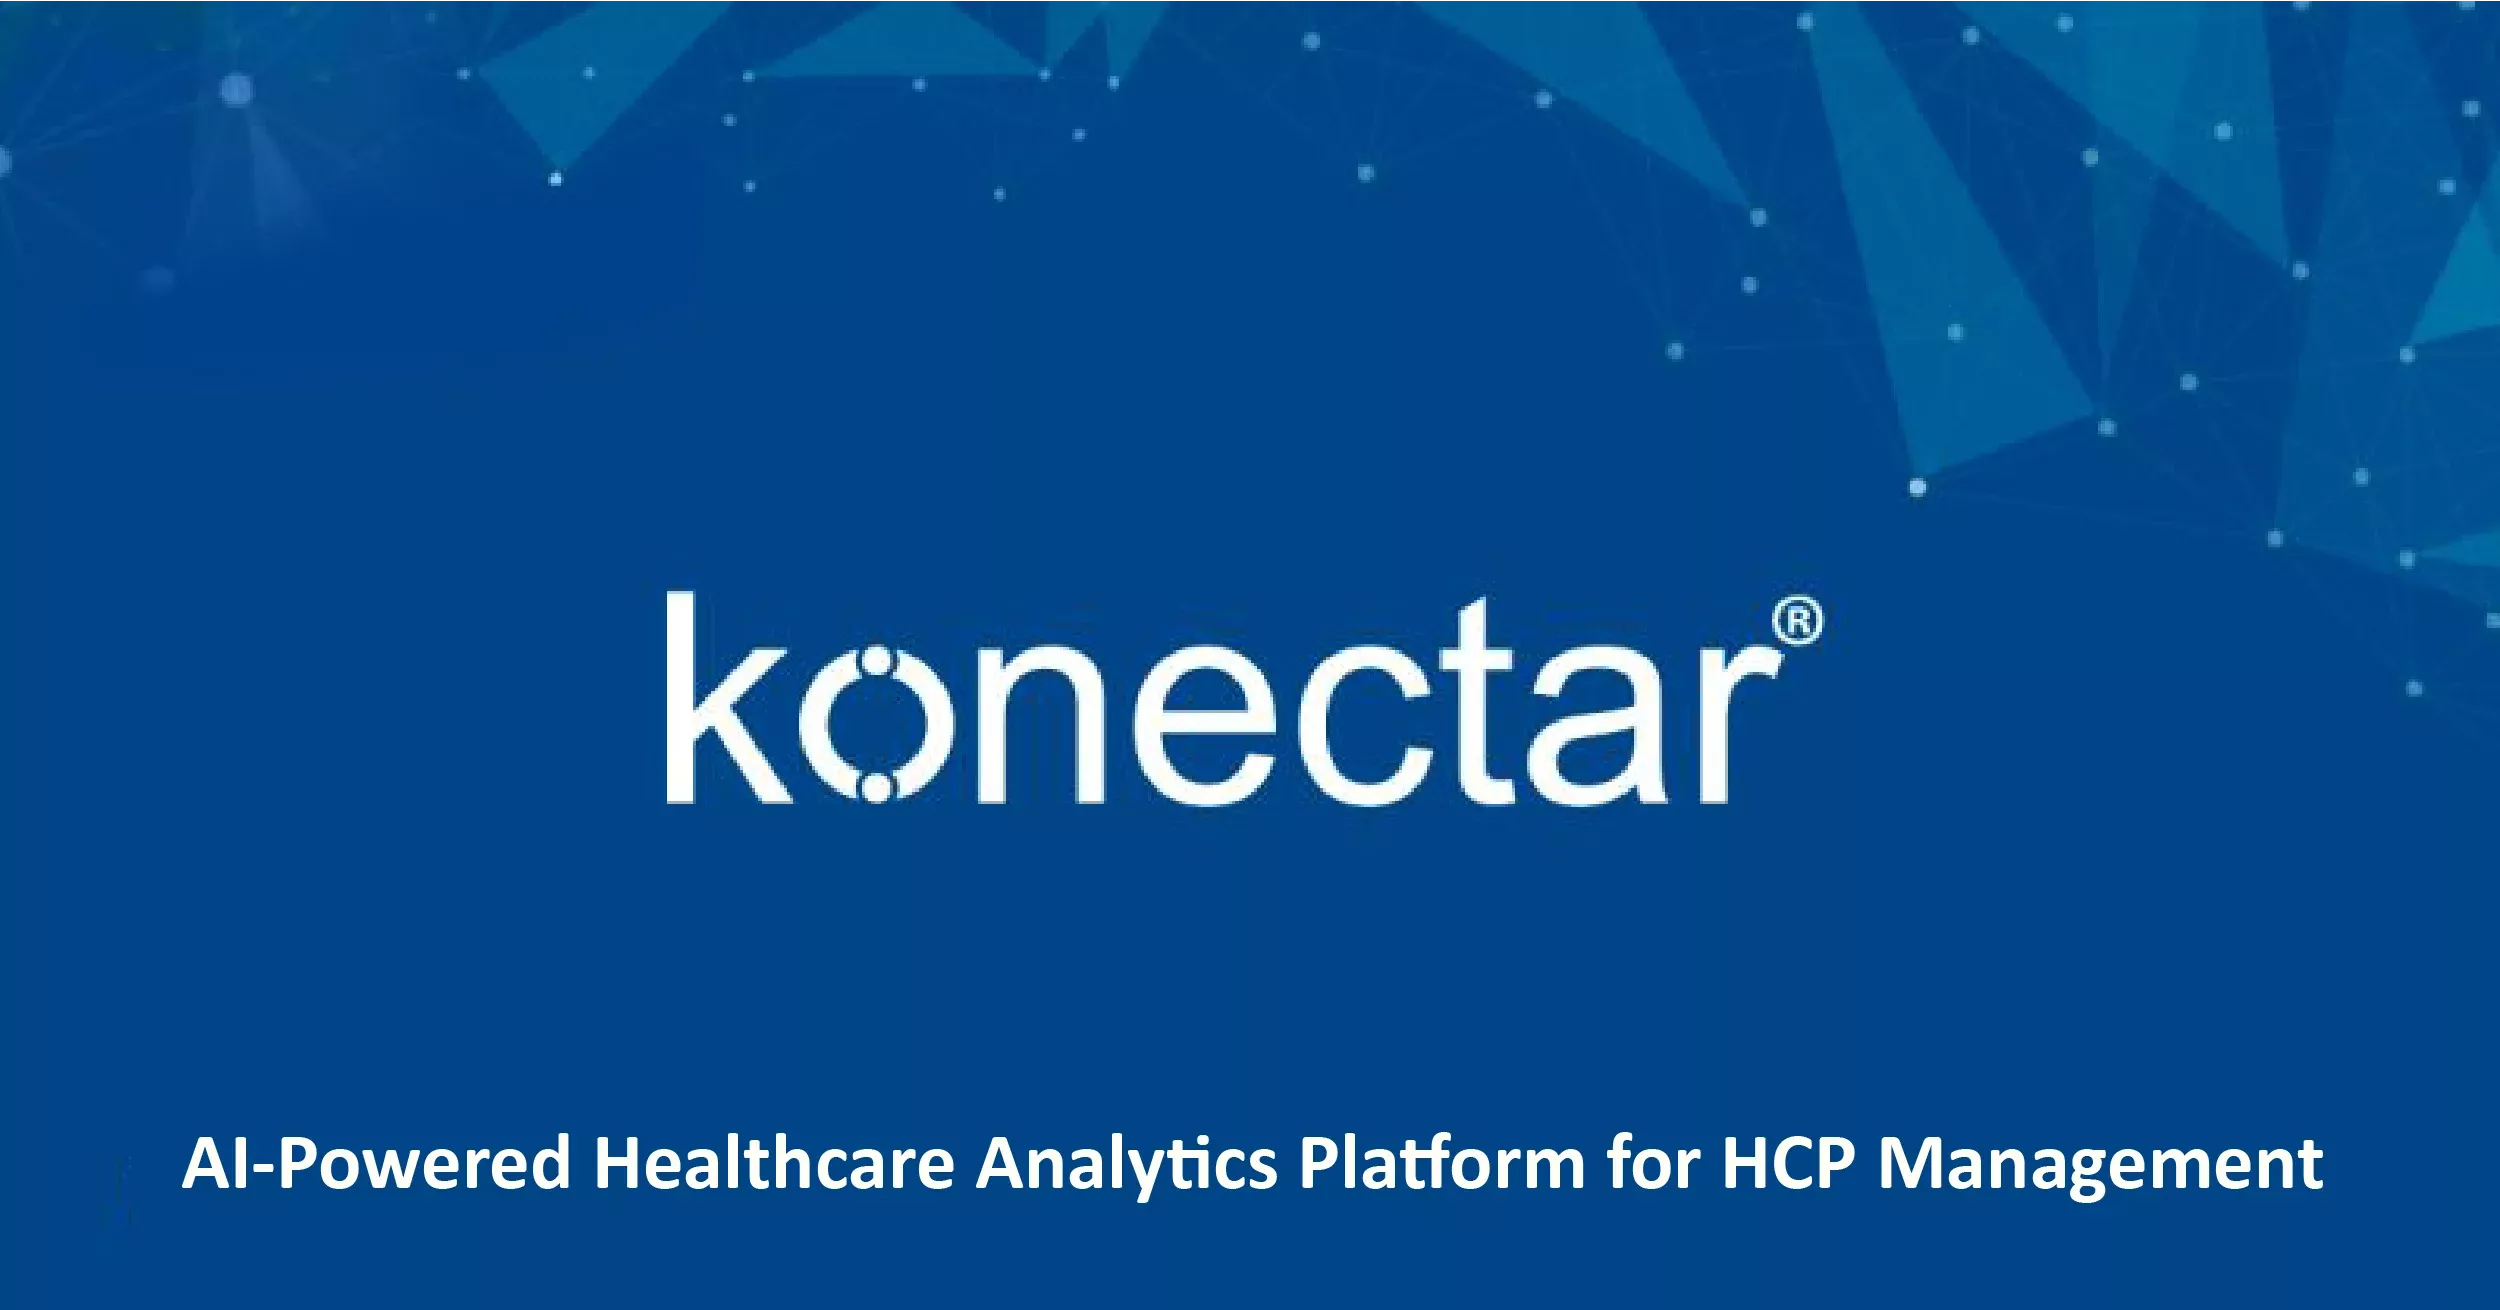 konectar - An AI-Powered Healthcare Analytics Platform for HCP Management